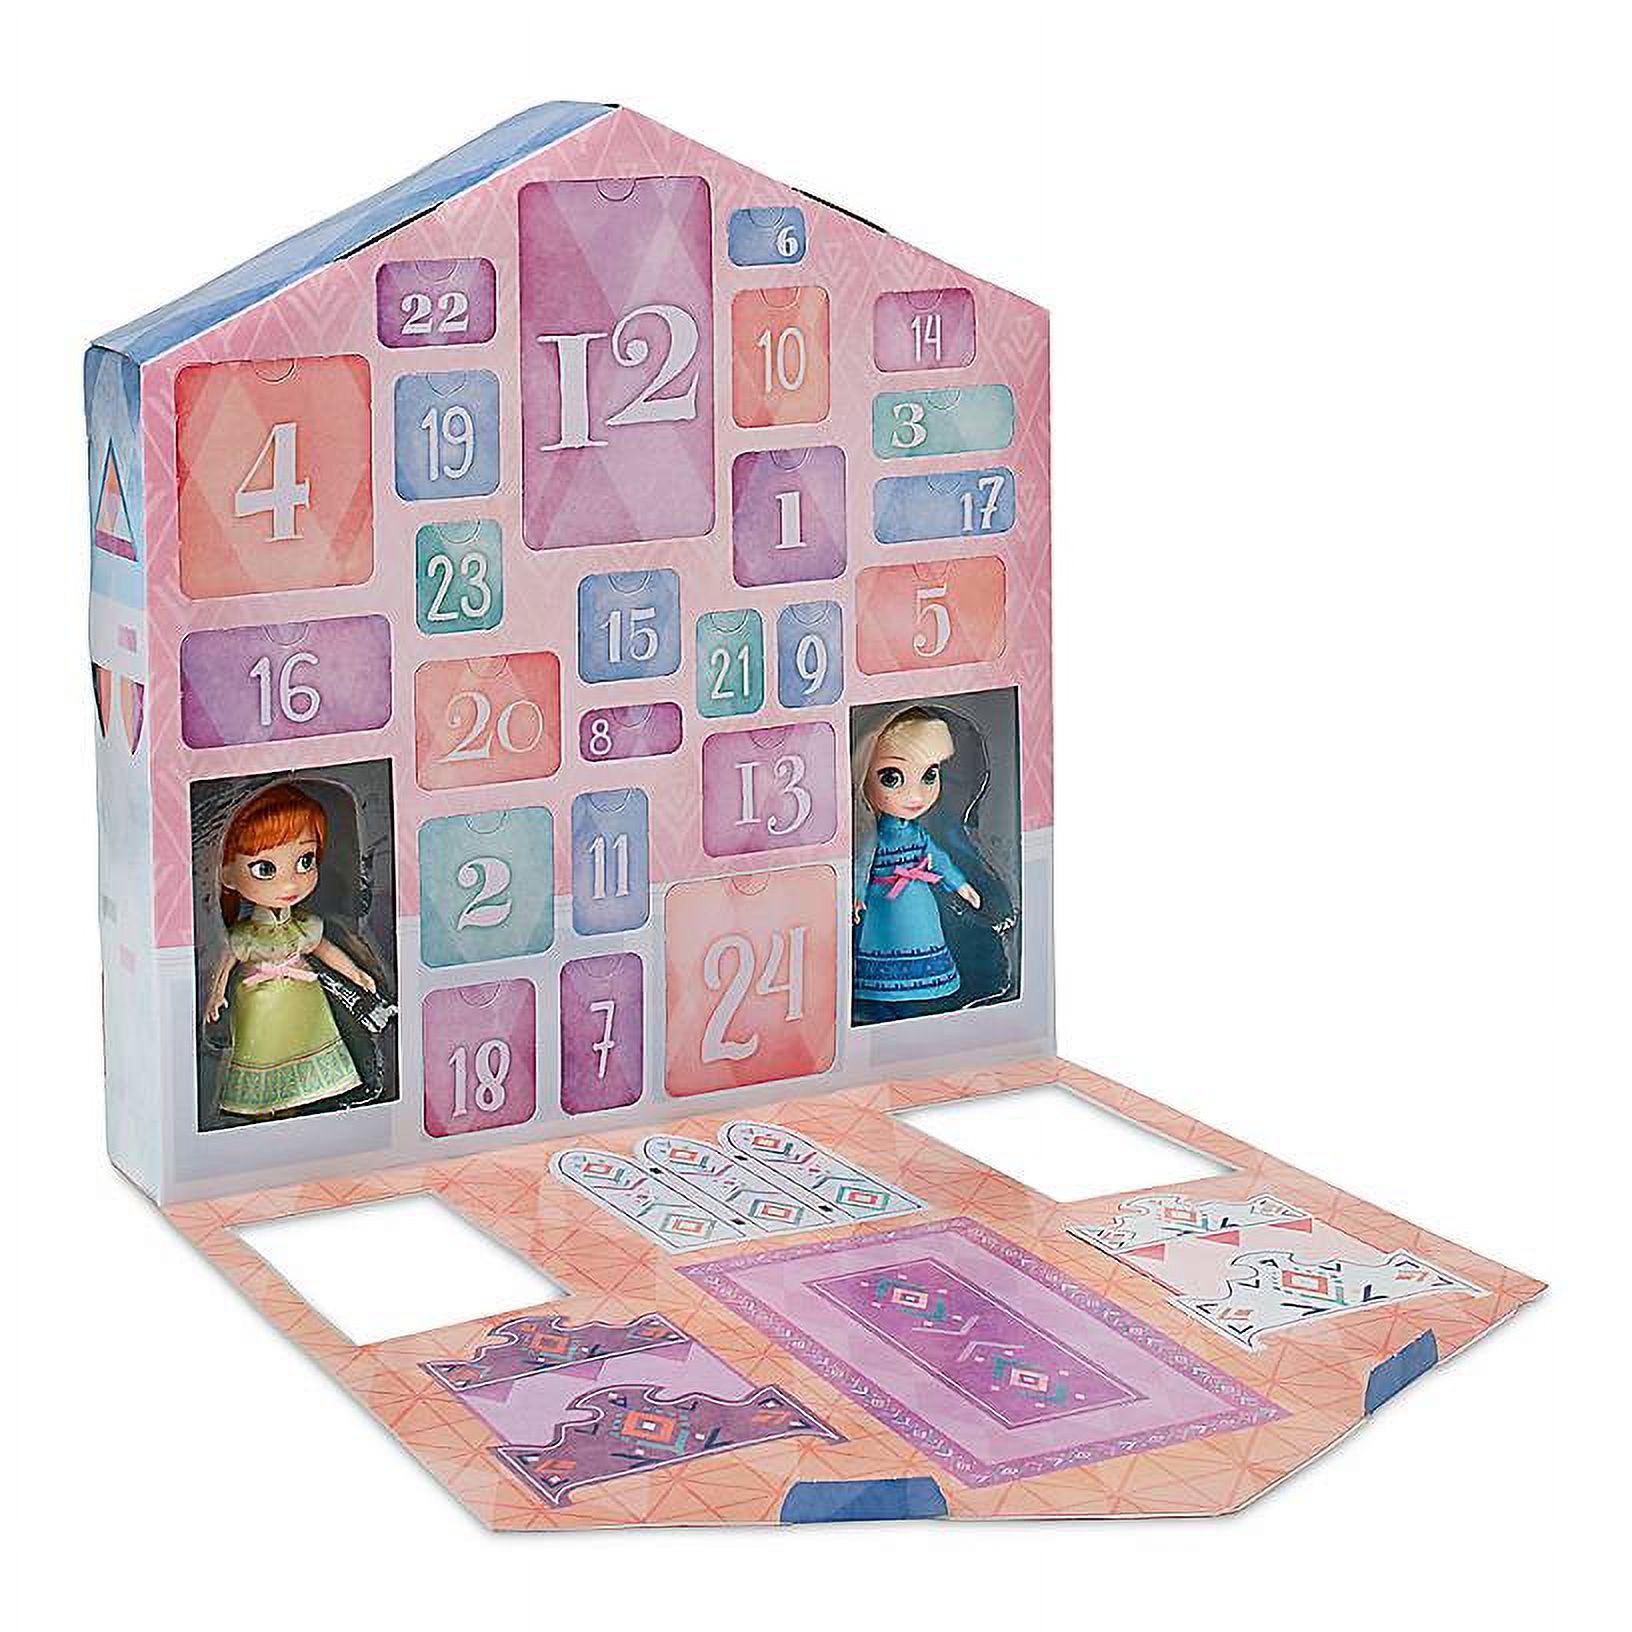 Disney Store Elsa Anna Frozen 2 Advent Calendar New with Box - image 3 of 4